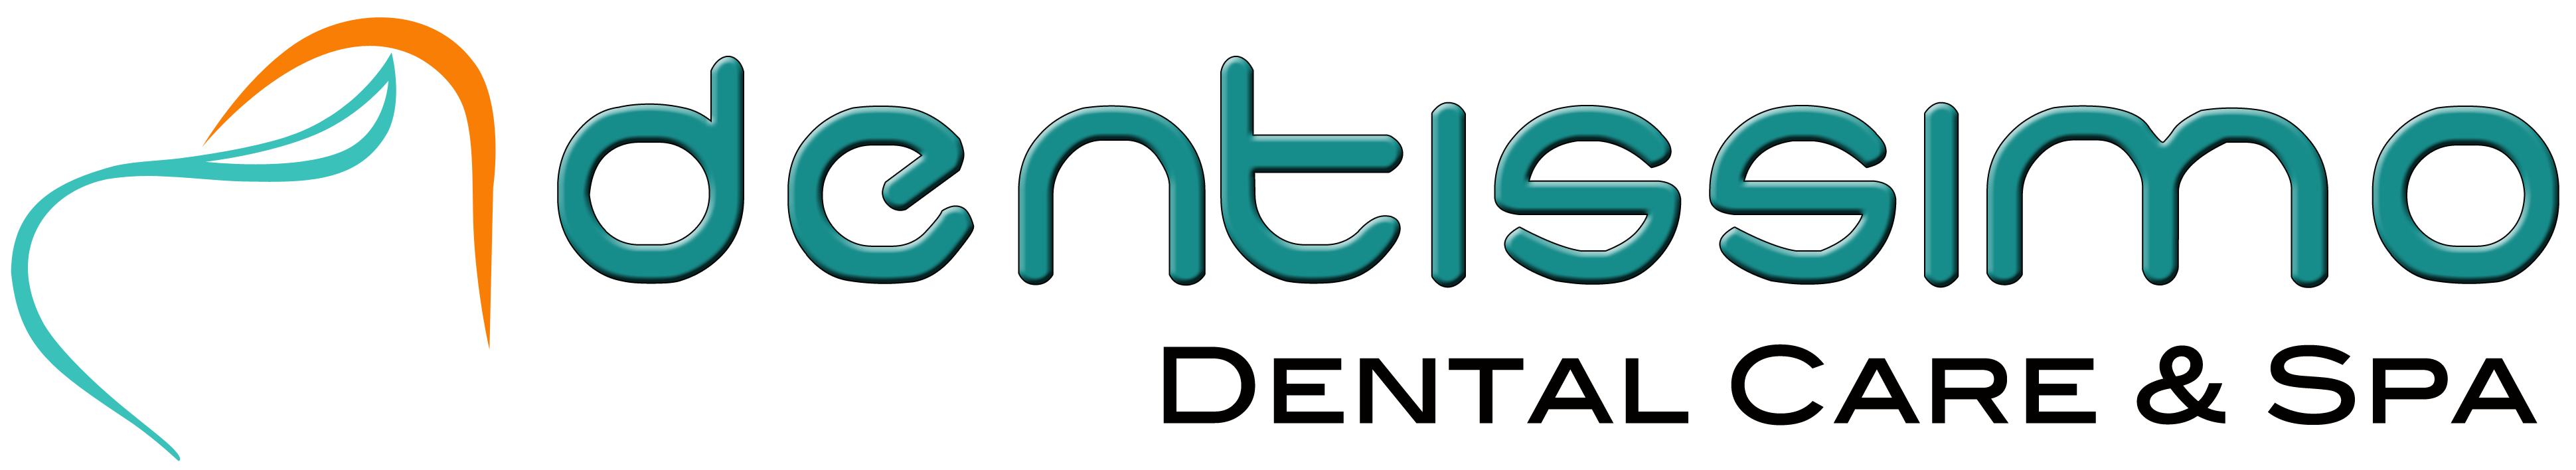 Dentissimo Dental Care & Spa|Dentists|Medical Services